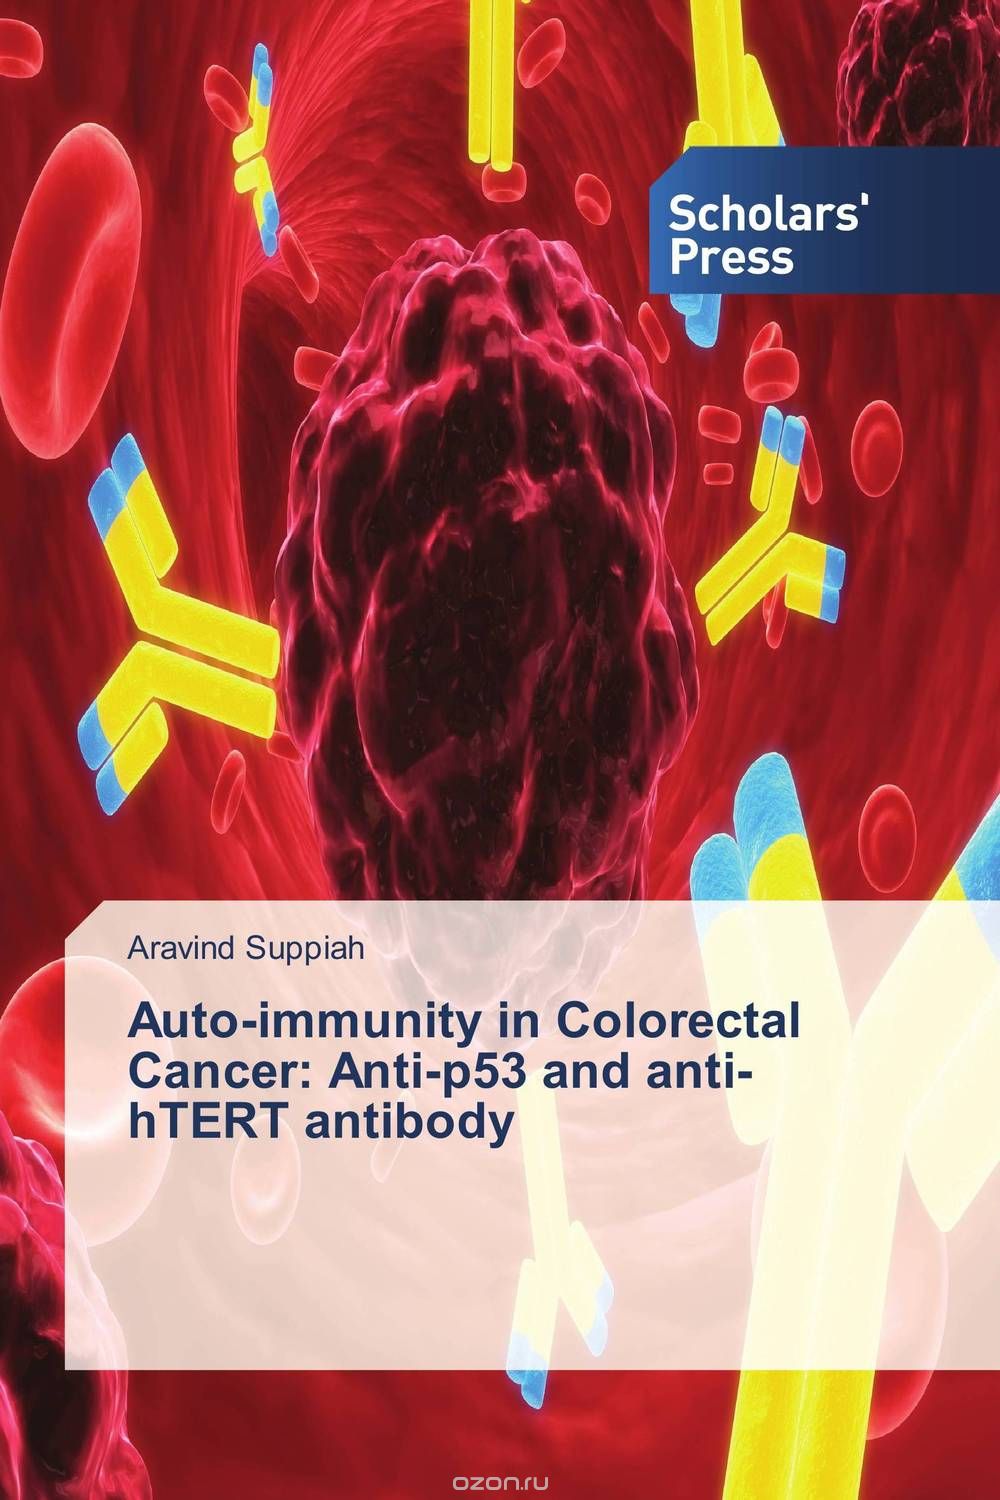 Скачать книгу "Auto-immunity in Colorectal Cancer: Anti-p53 and anti-hTERT antibody"